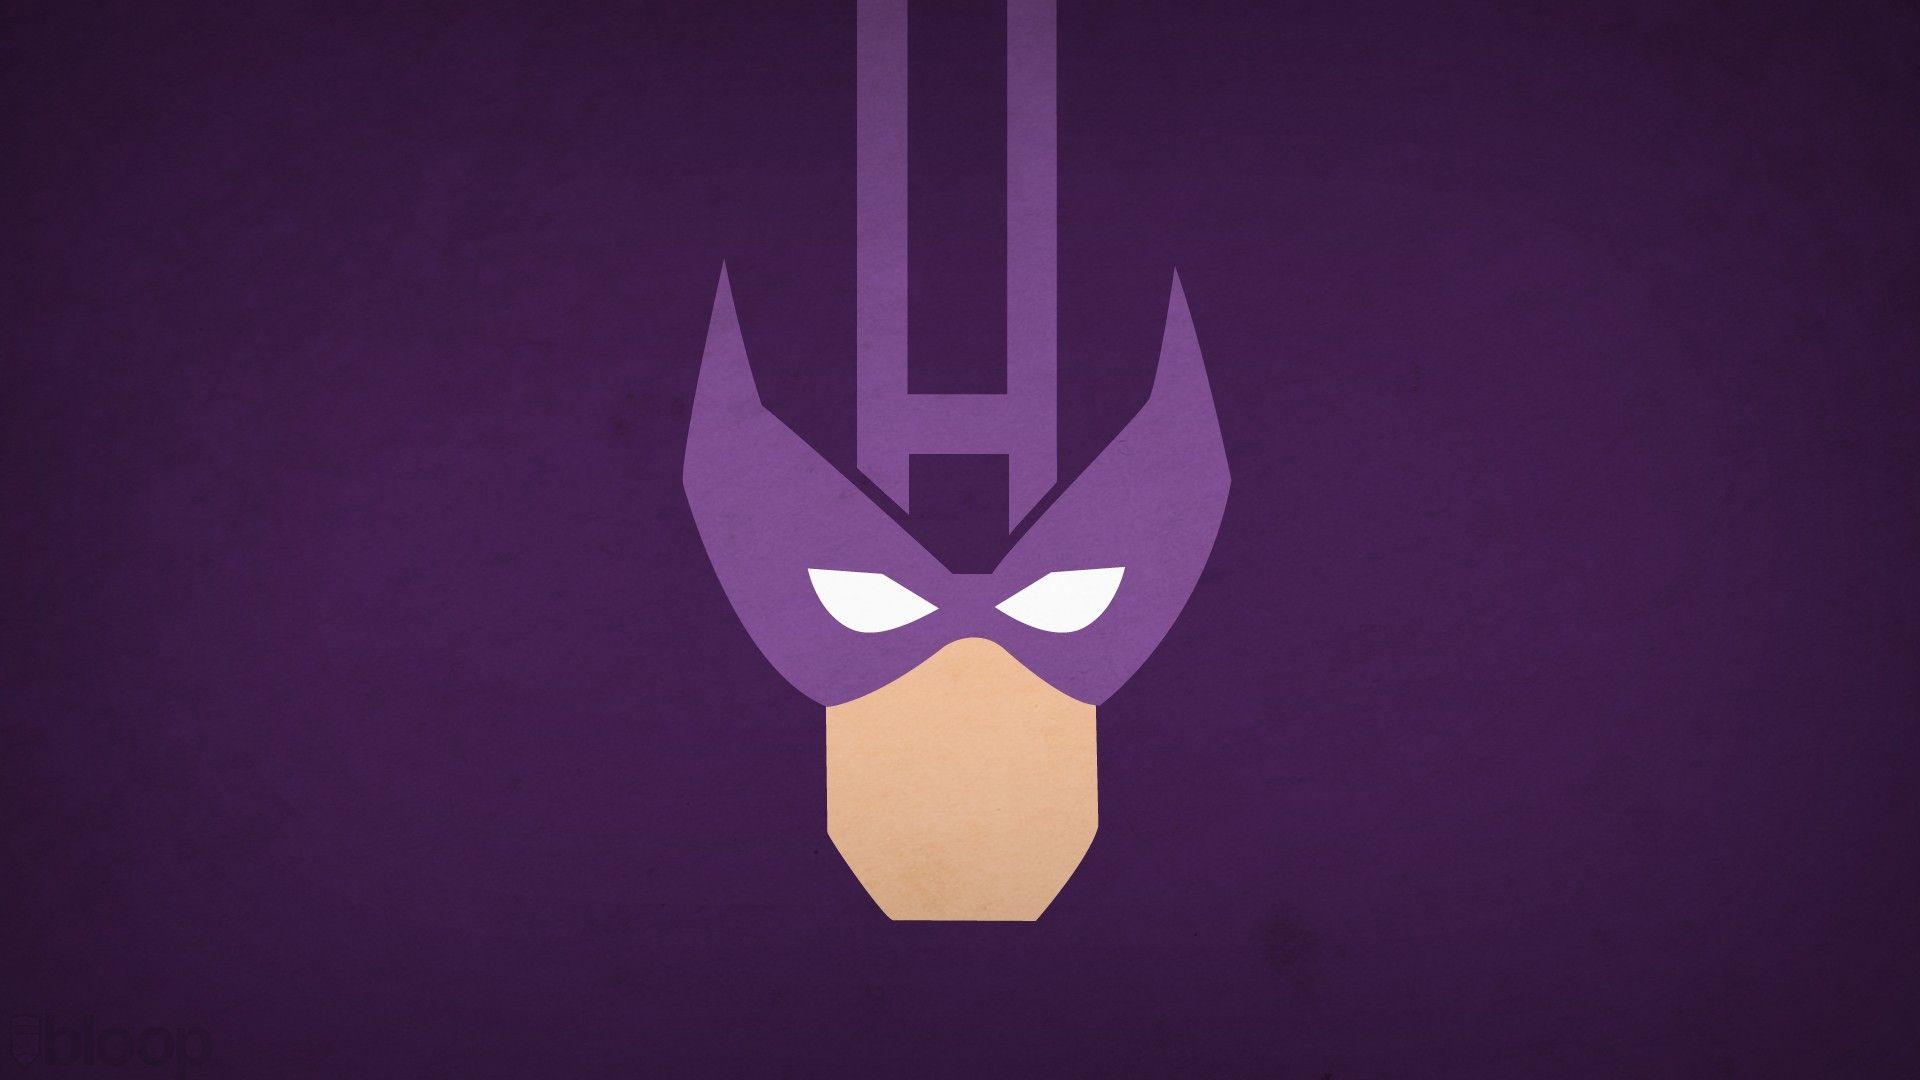 Flash Superhero Logo Wallpaper